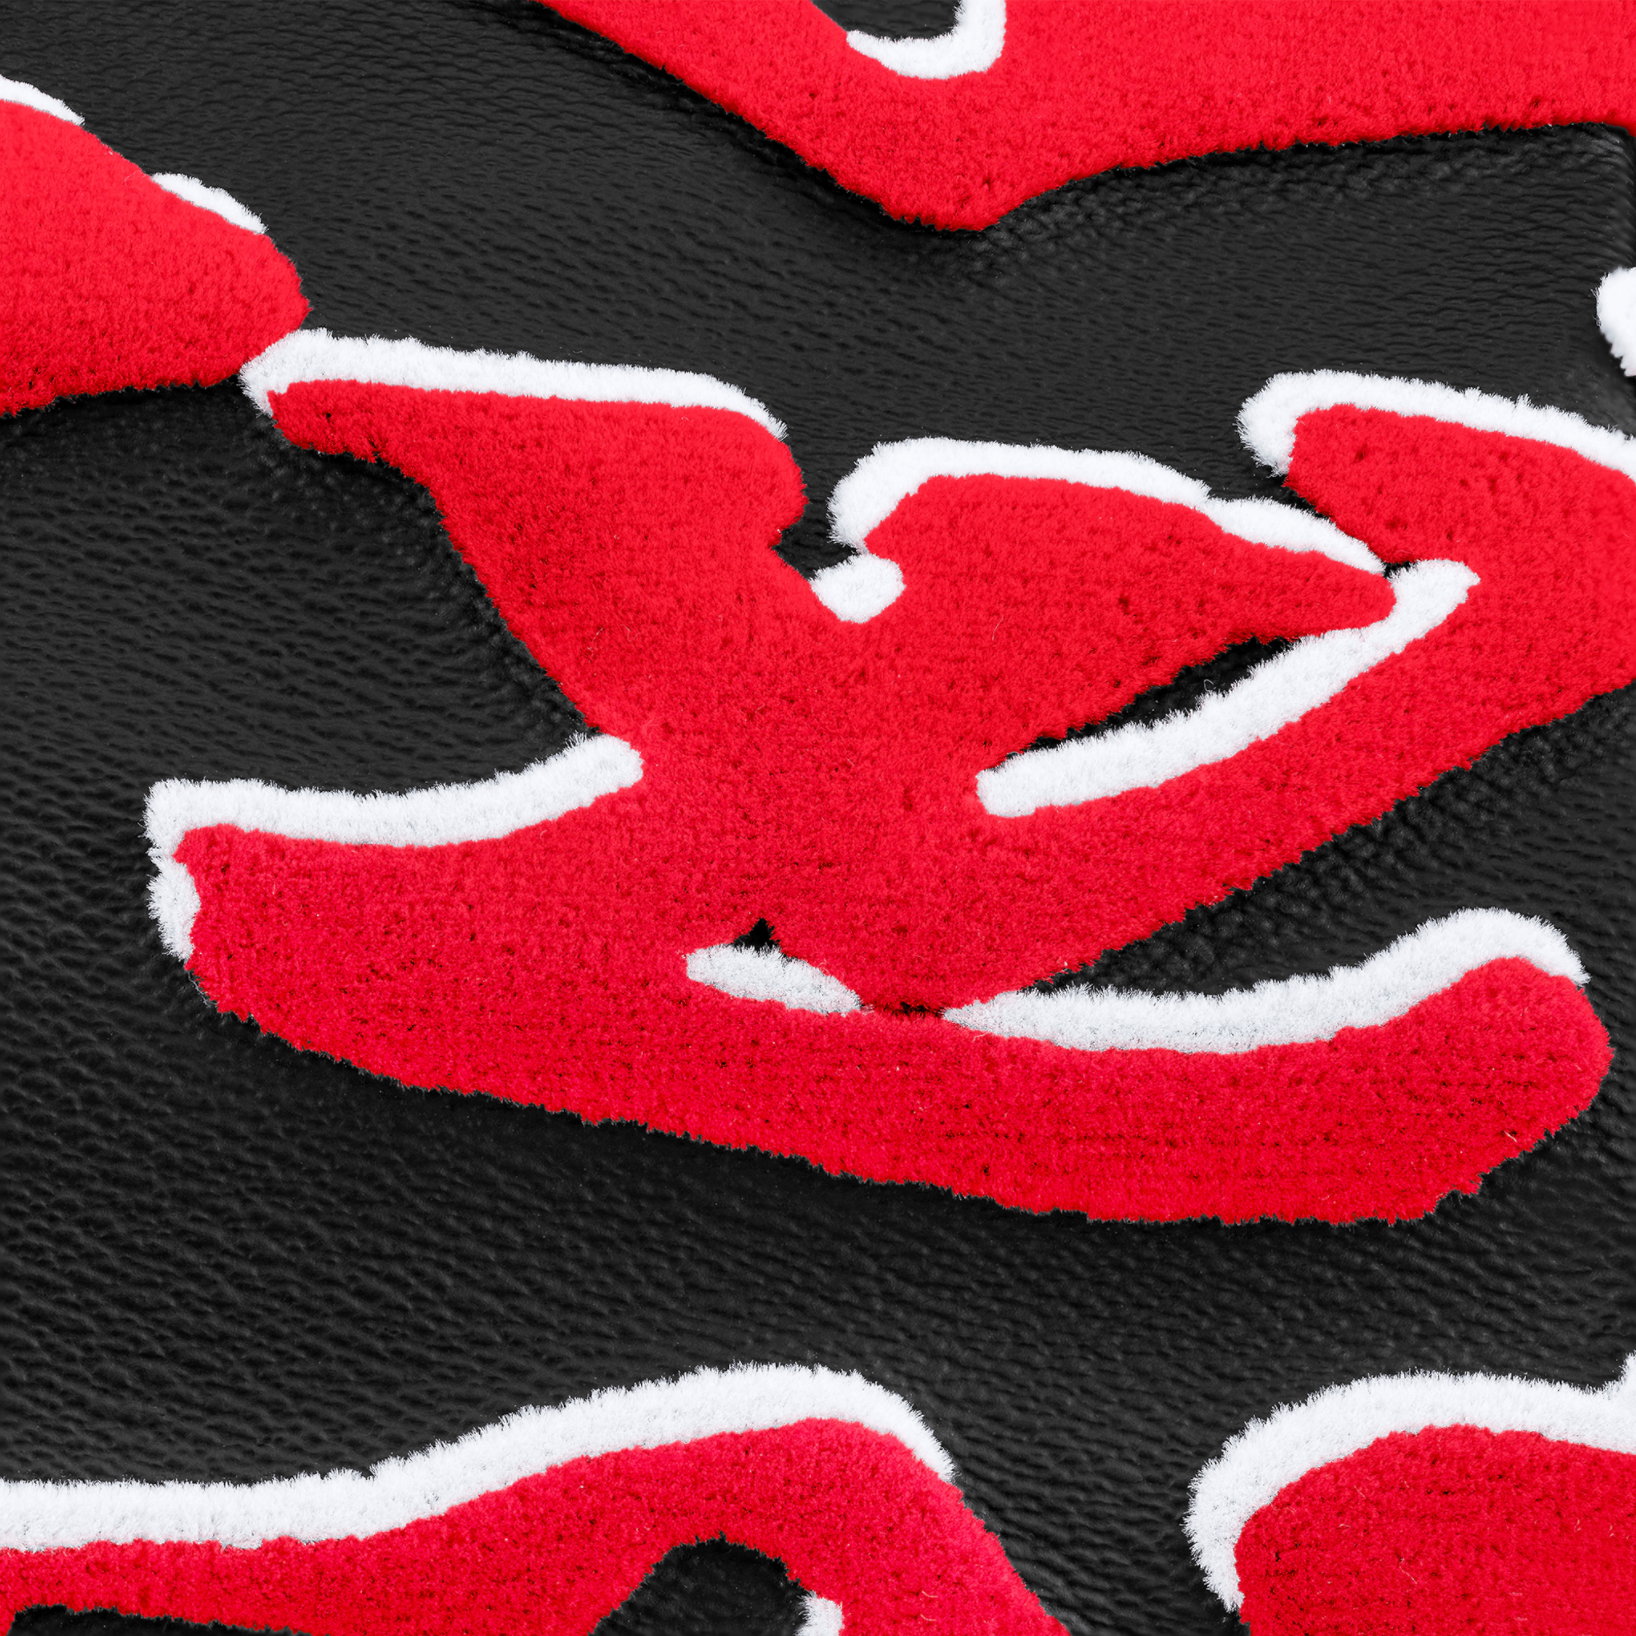 Louis Vuitton x Urs Fischer Red Black Tufted Keepall Bandouliere